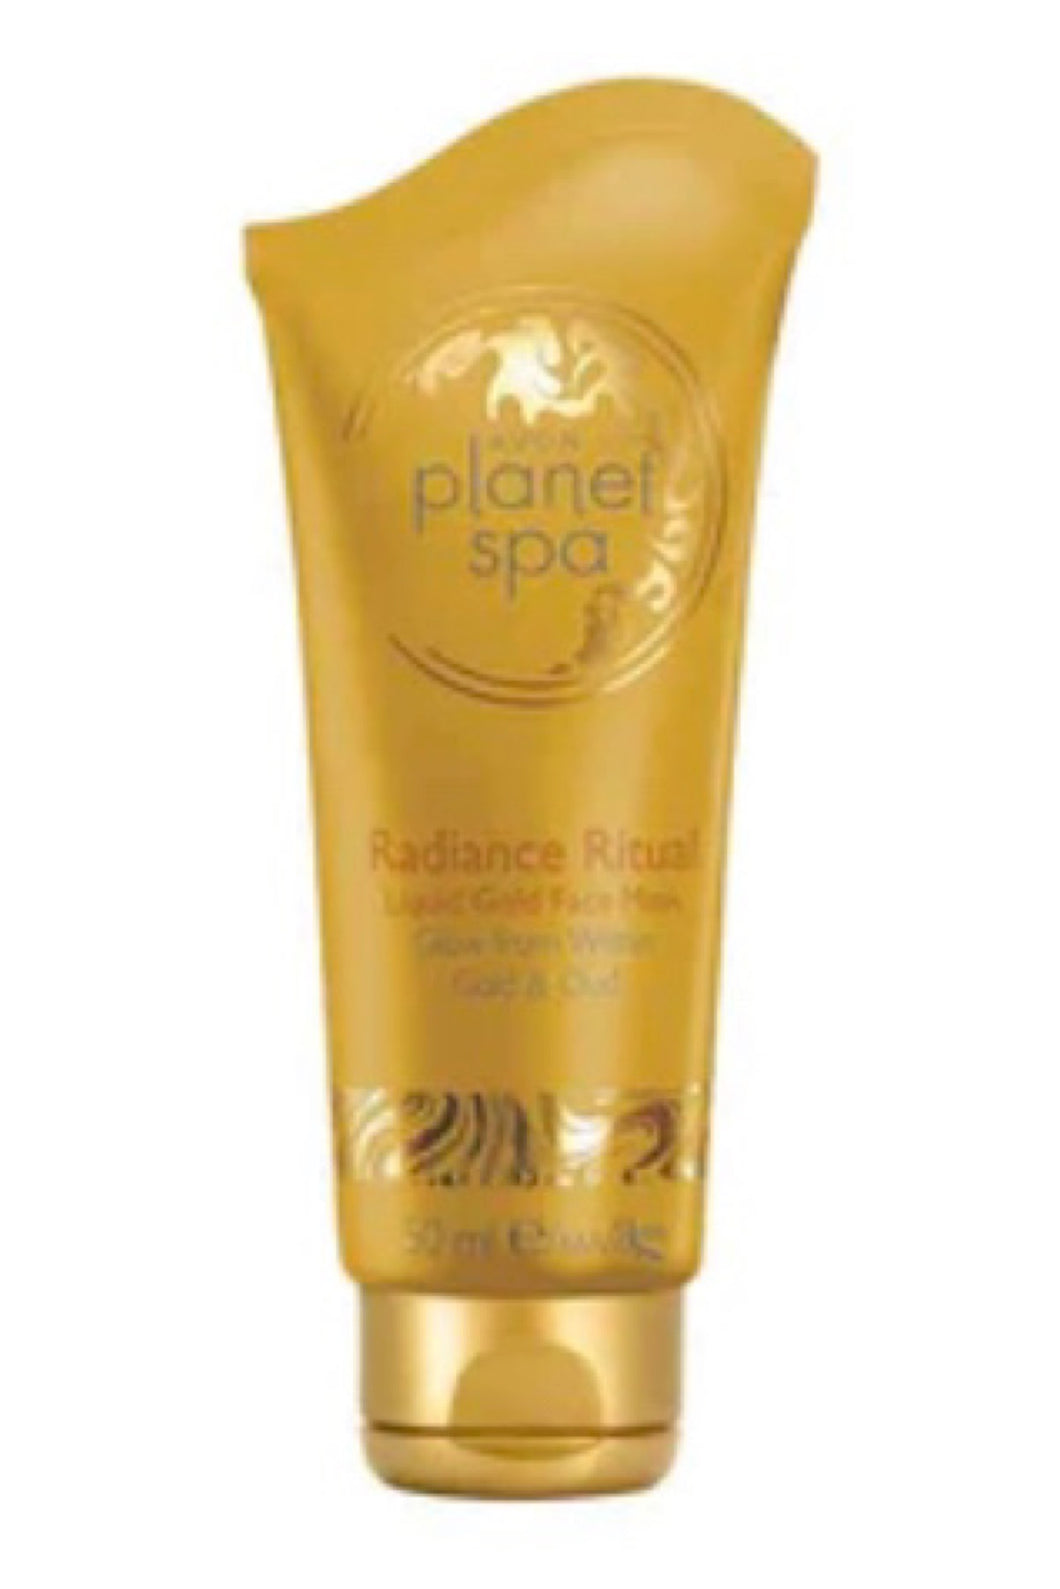 Planet Spa Radiance Ritual Liquid Gold Face Mask 50ml